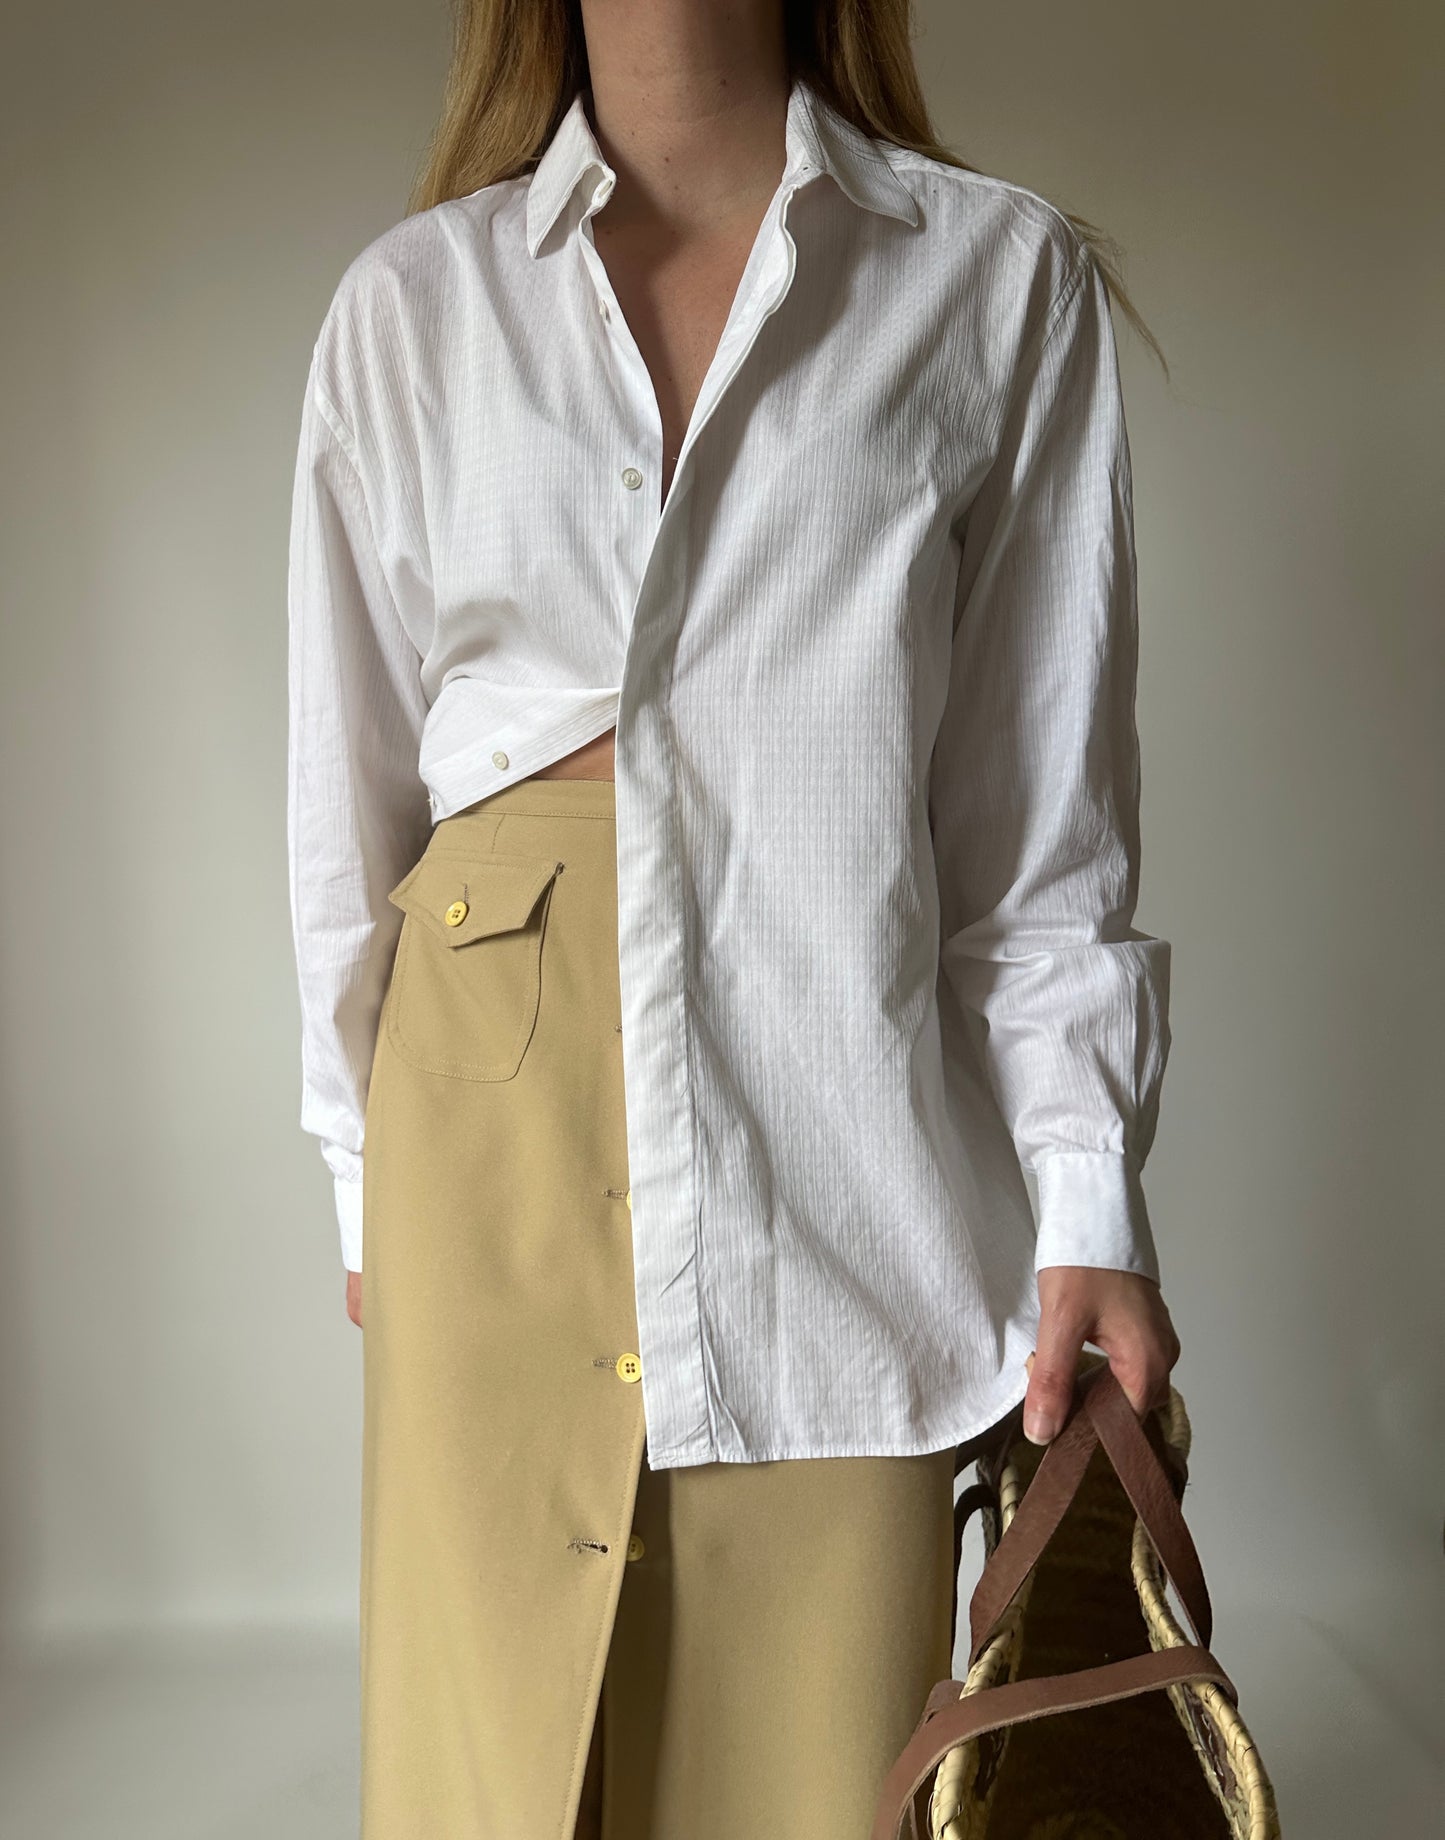 Pierre Cardin white cotton shirt